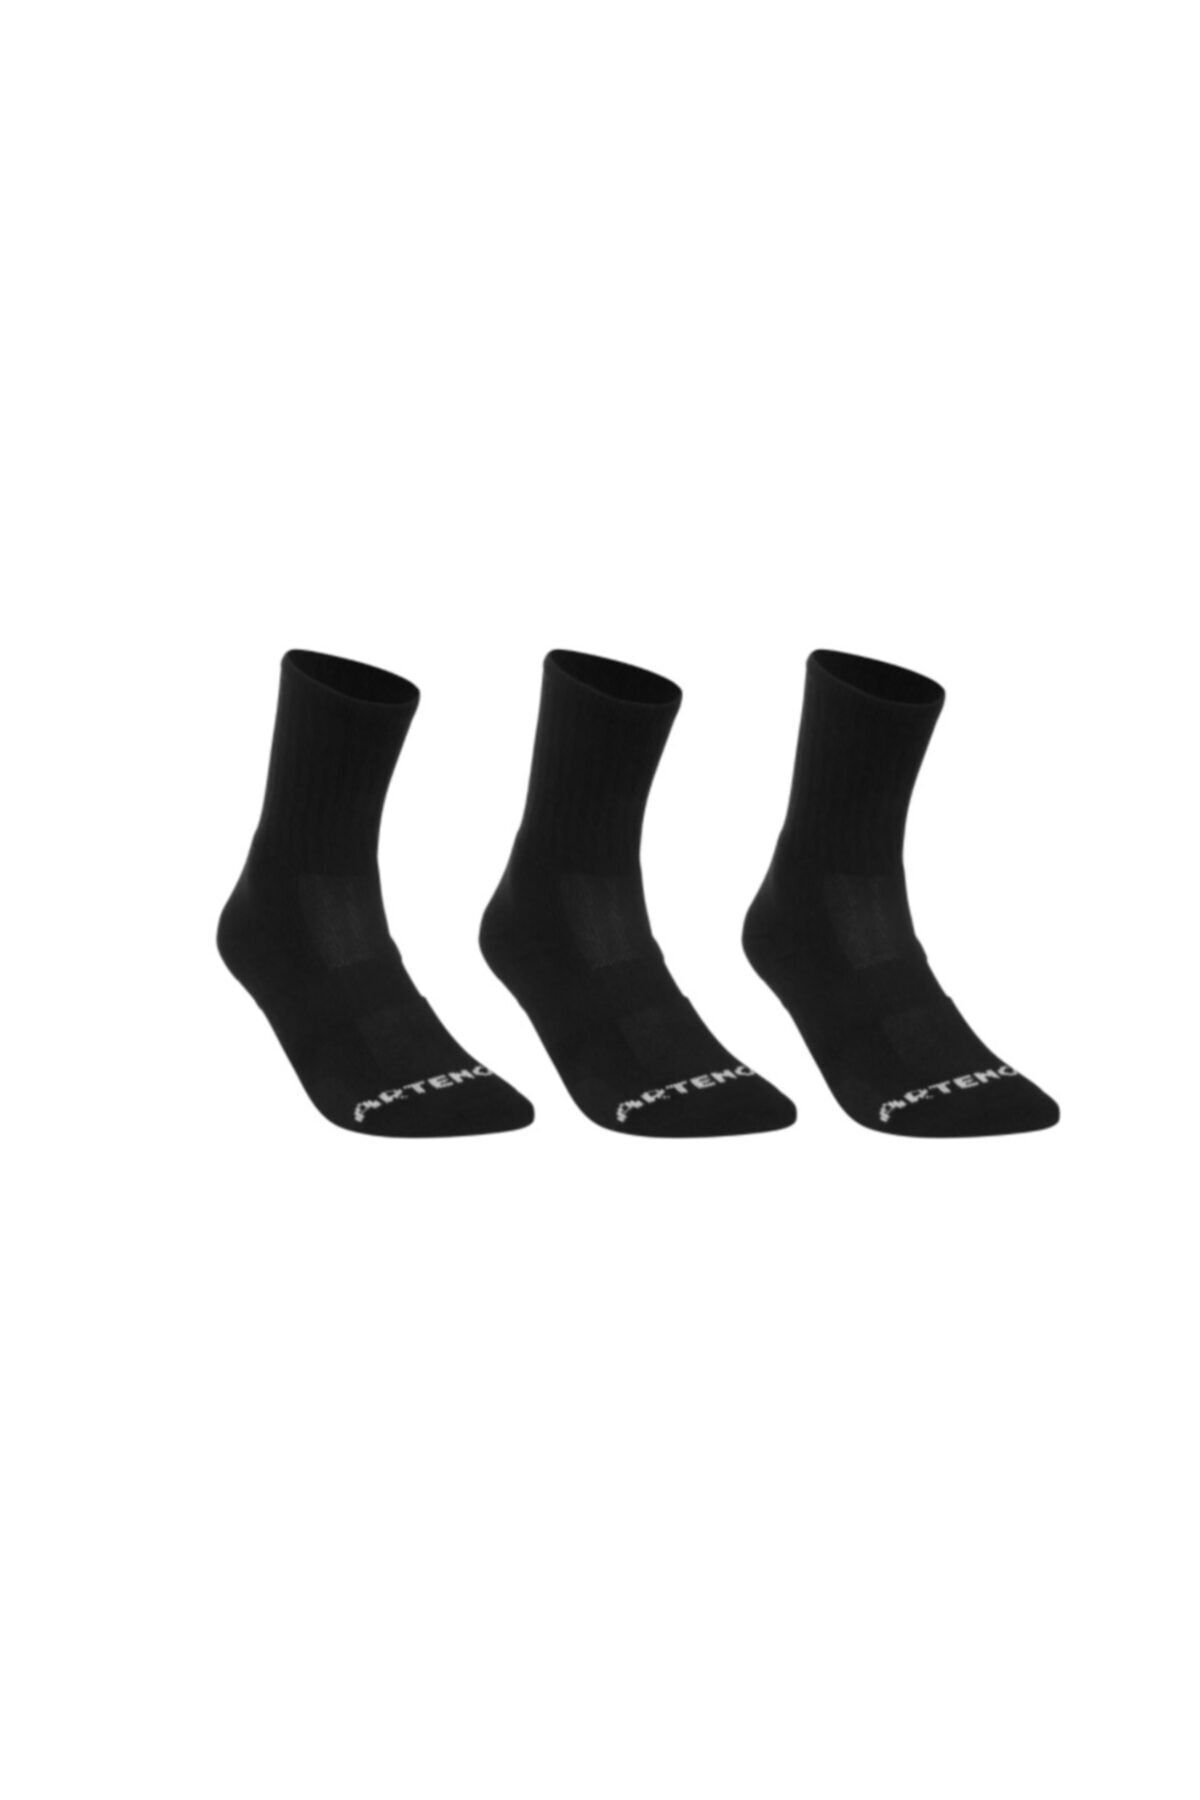 HUHULOGY Unisex Spor Çorabı 3 Çift Siyah Rs500 Artengo